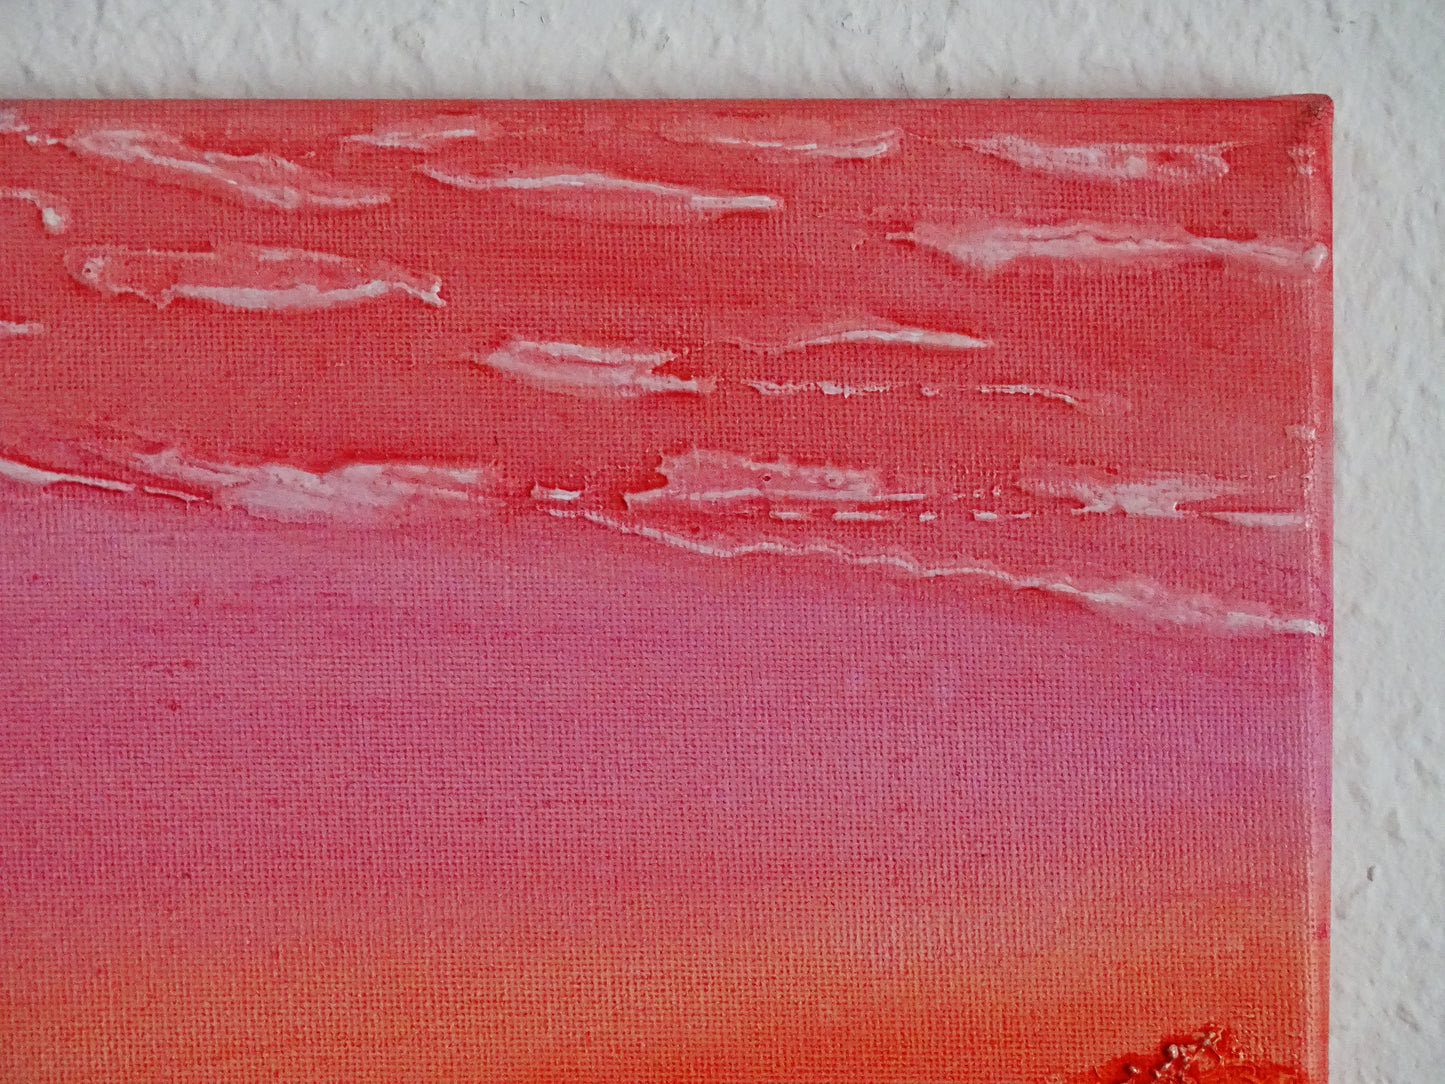 Silver Mountain in Red / Abstrakte Malerei / Acrylgemälde / 30 x 40 cm / Original